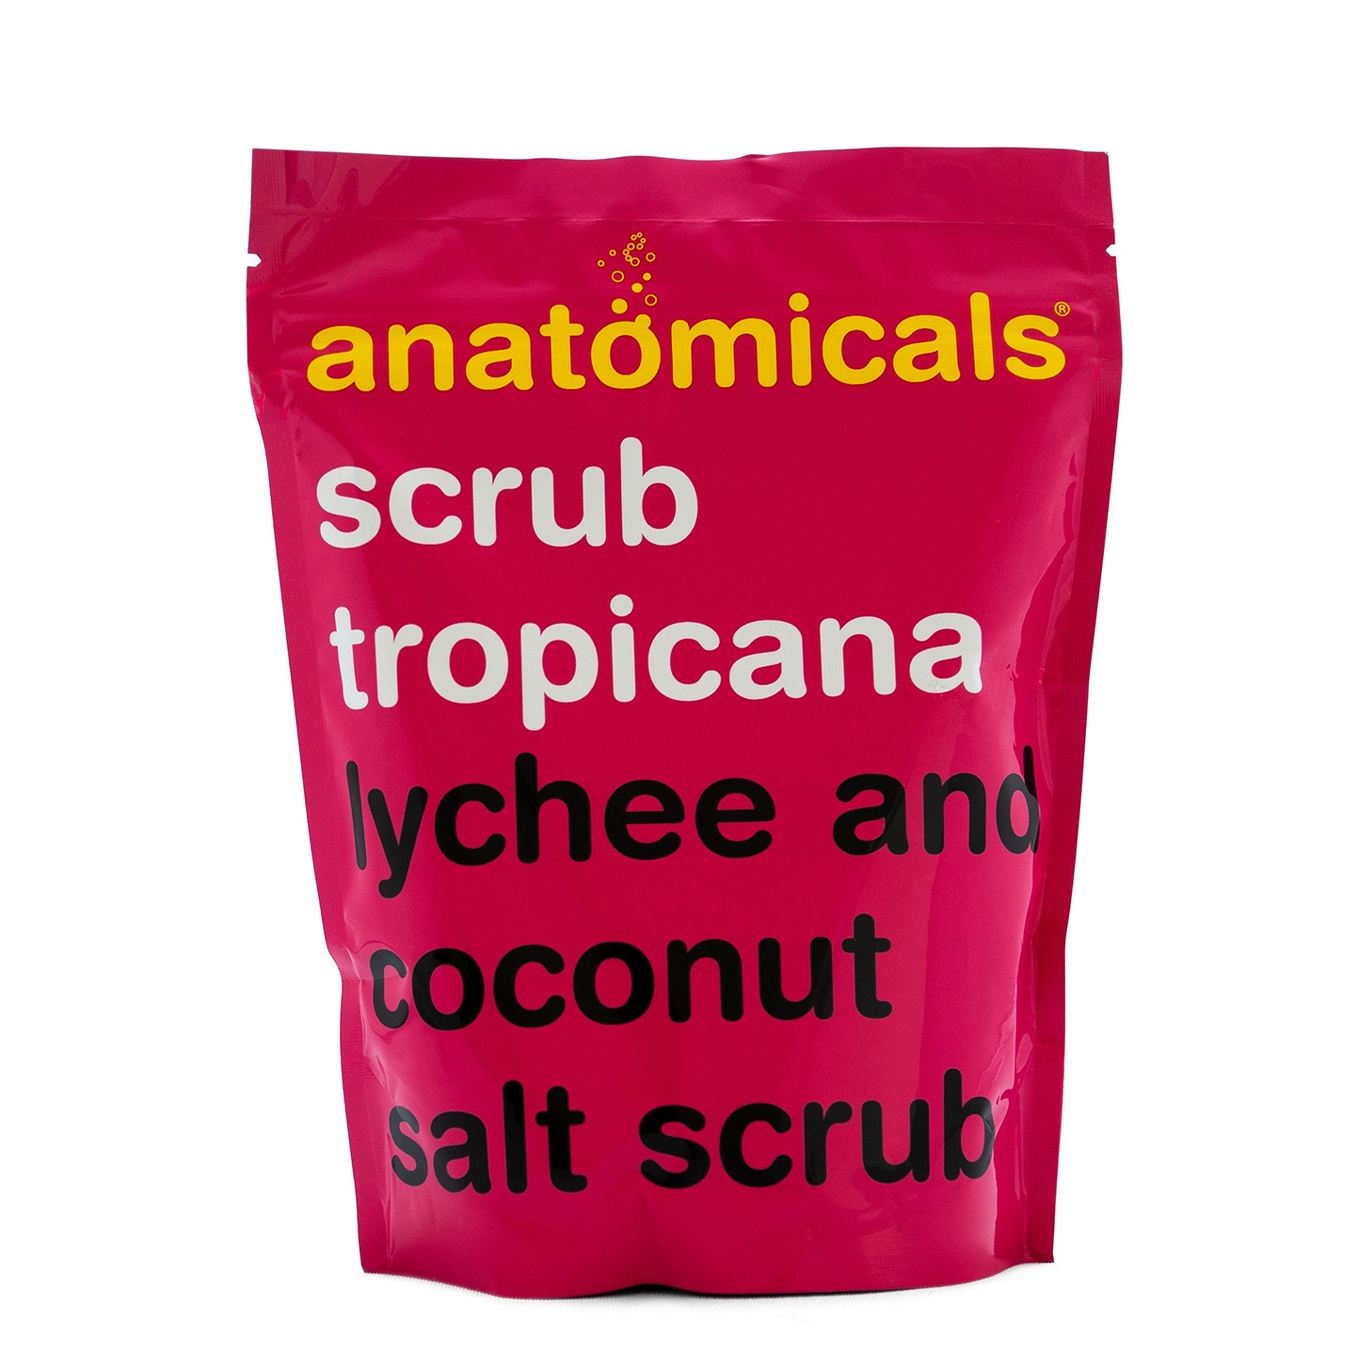 Anatomicals Scrub Tropicana Lychee And Coconut Salt Scrub